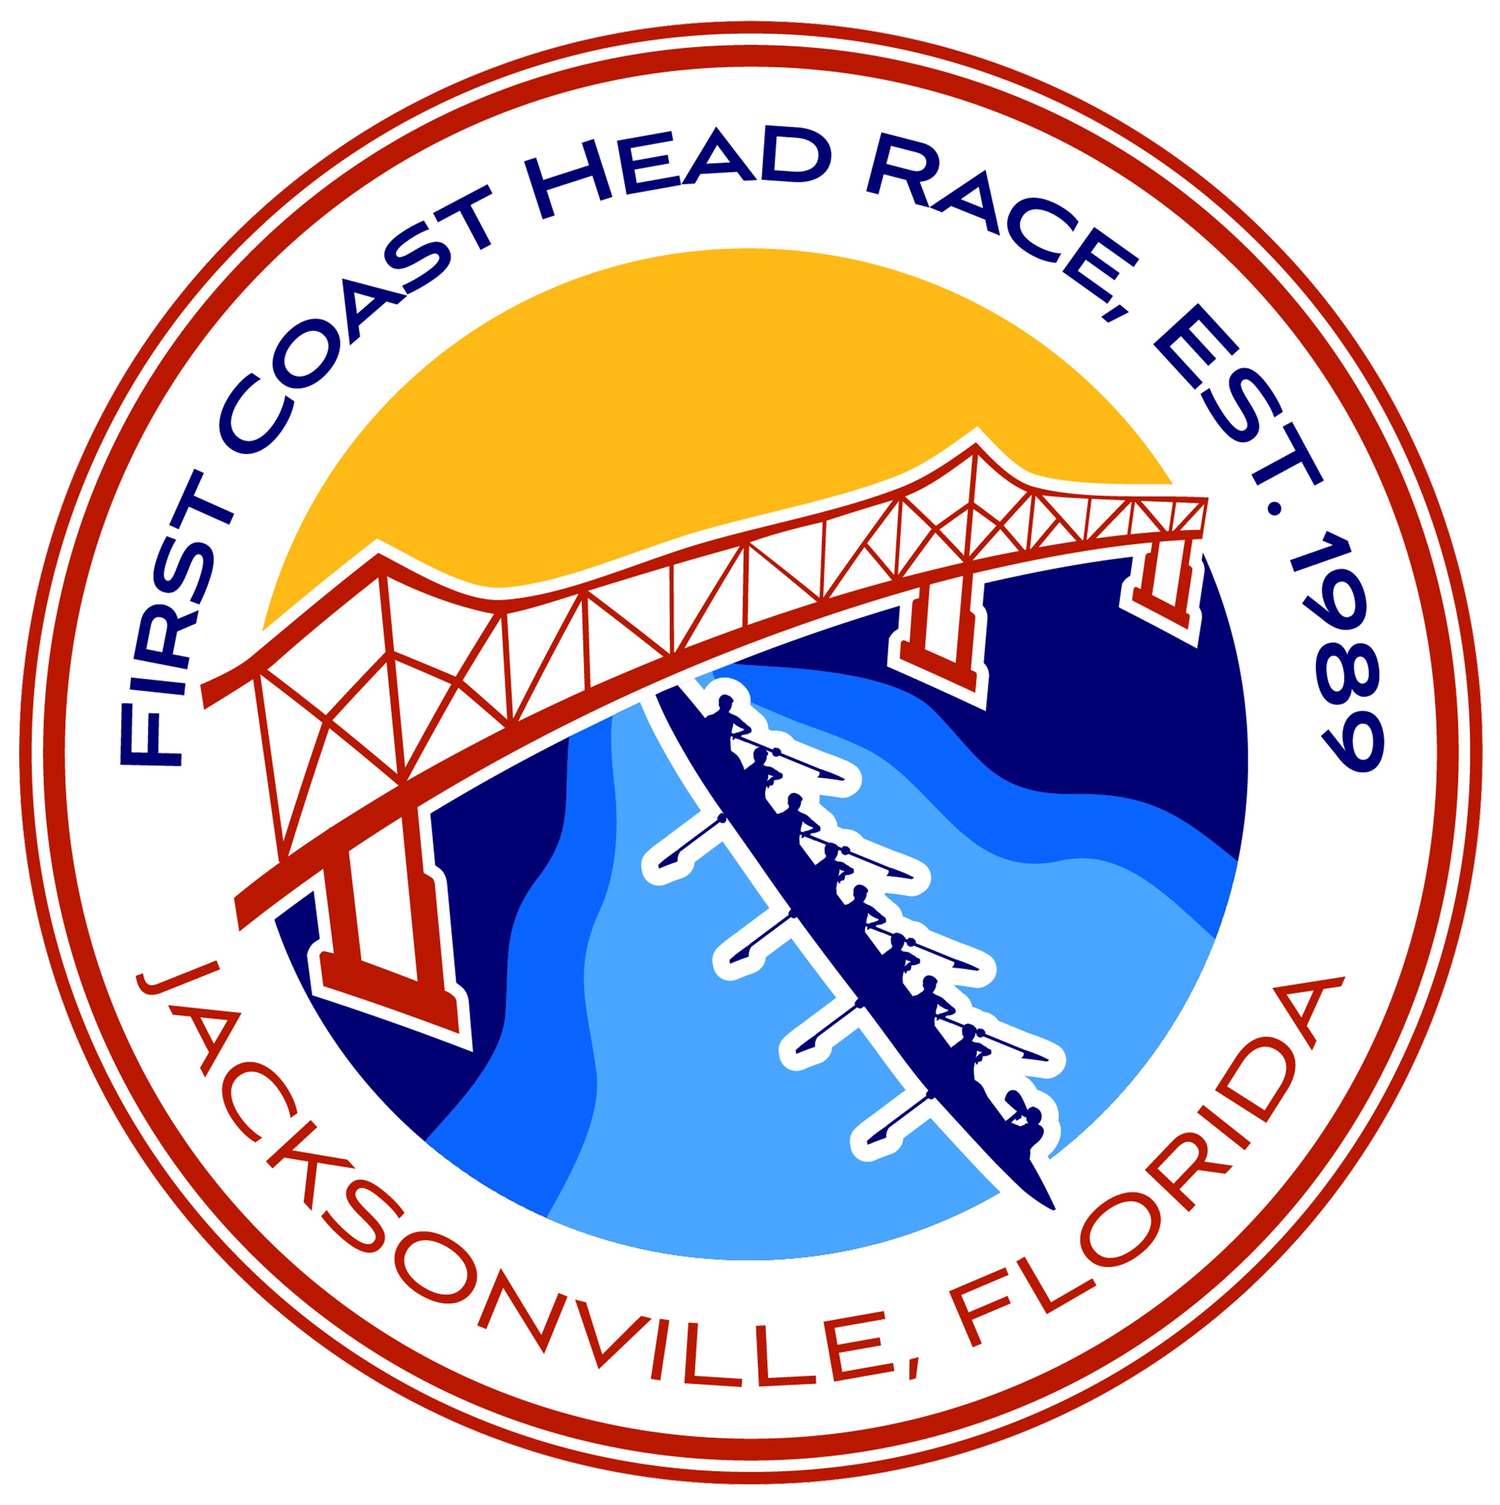 First Coast Head Race